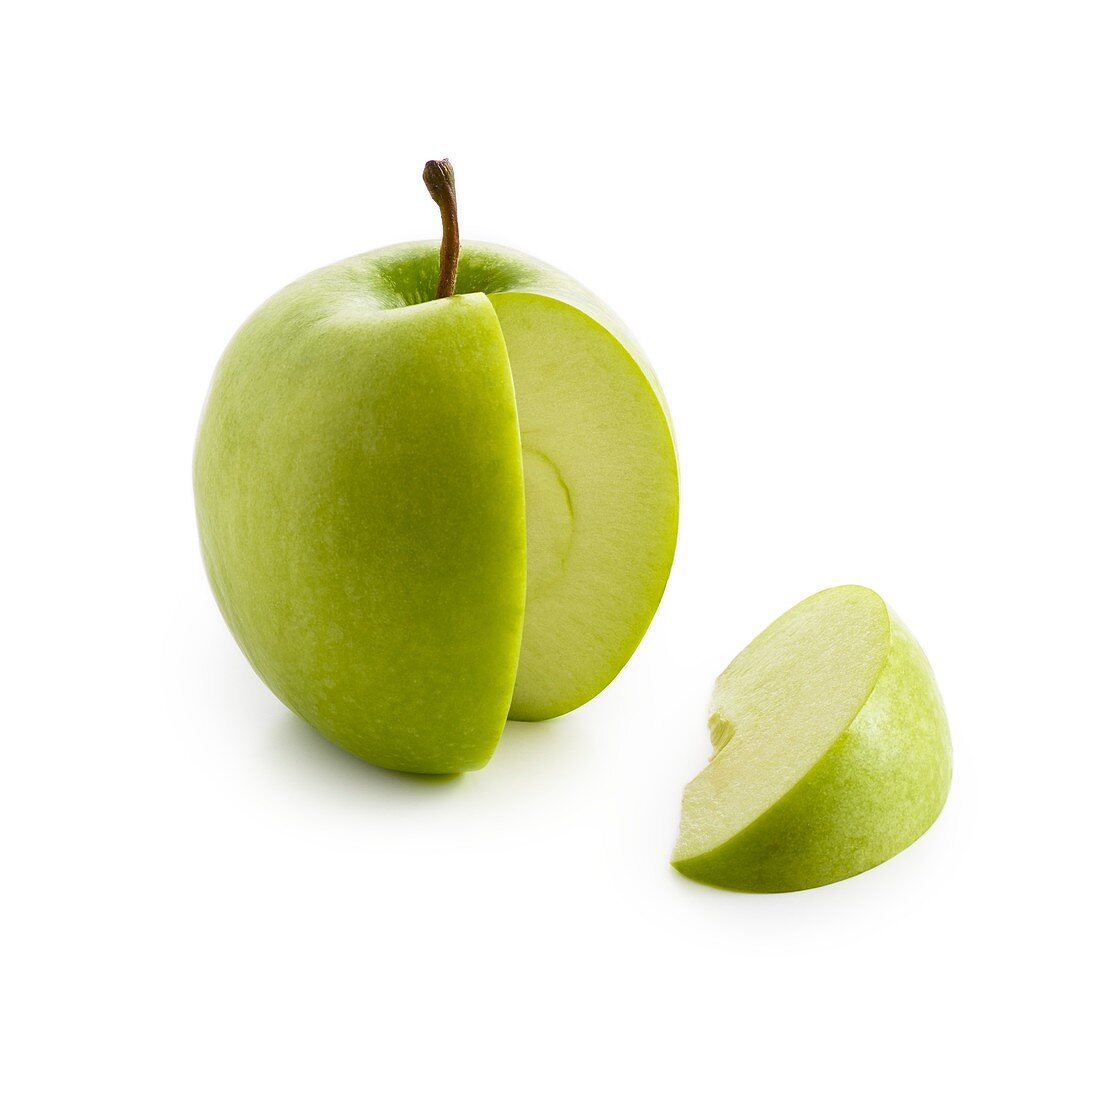 Apple segment cut from apple